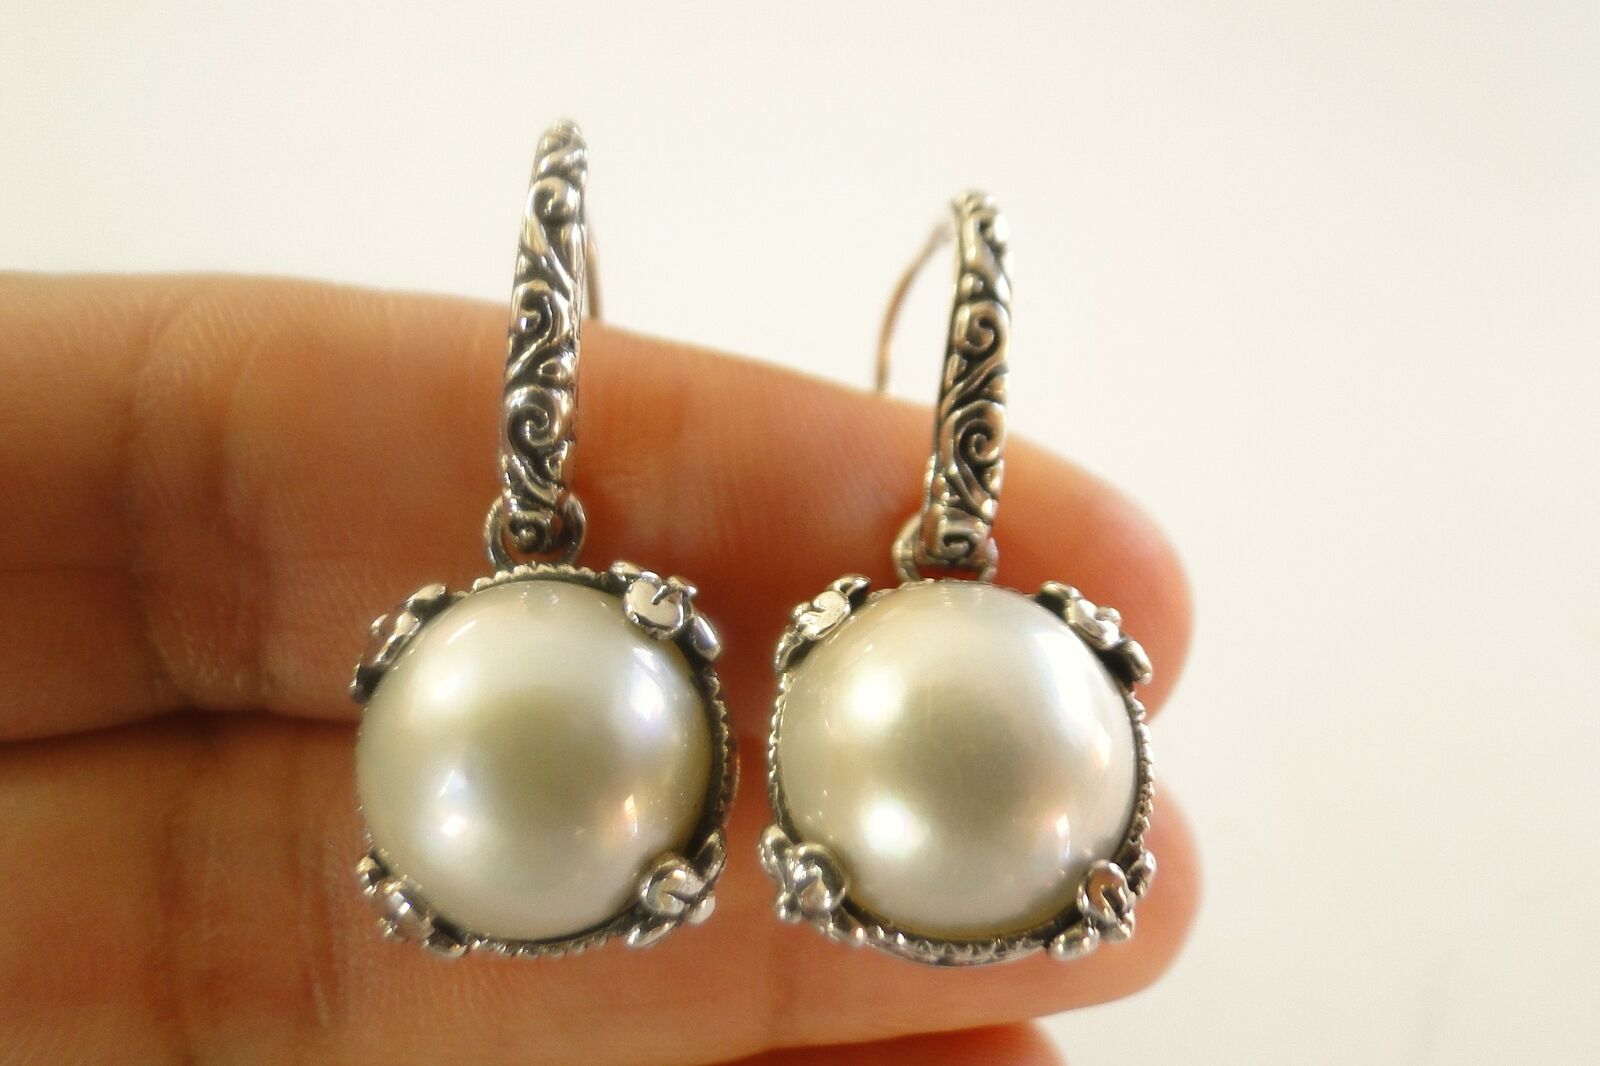 White Made Pearl Ornate 925 Sterling Silver Dangle Drop Earrings Wyprzedaż limitowana, bardzo popularna